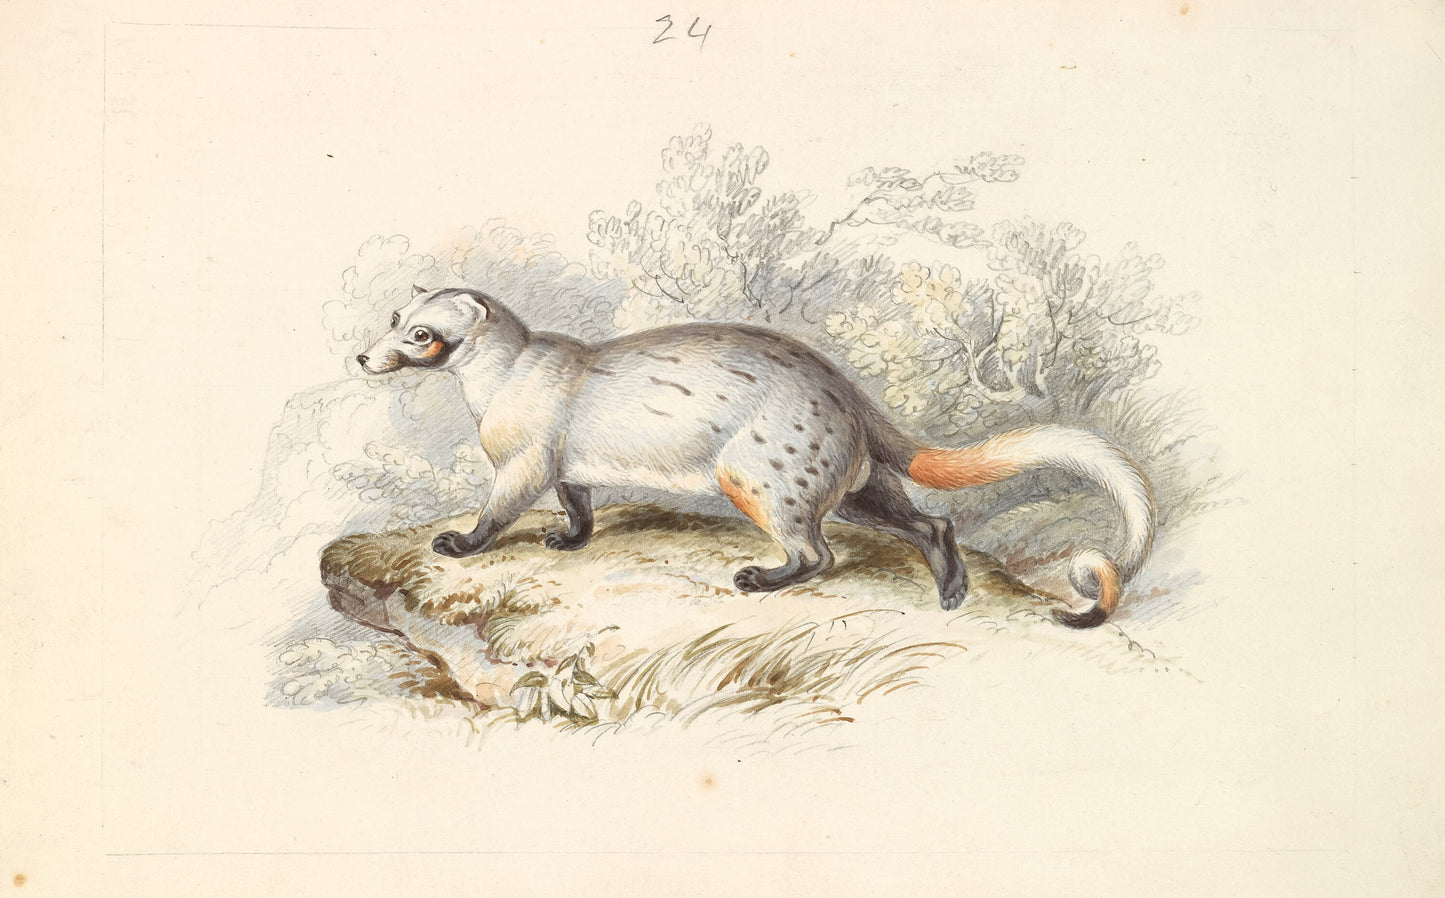 Charles Hamilton Smith Mammal Illustrations Set 2 [47 Images]